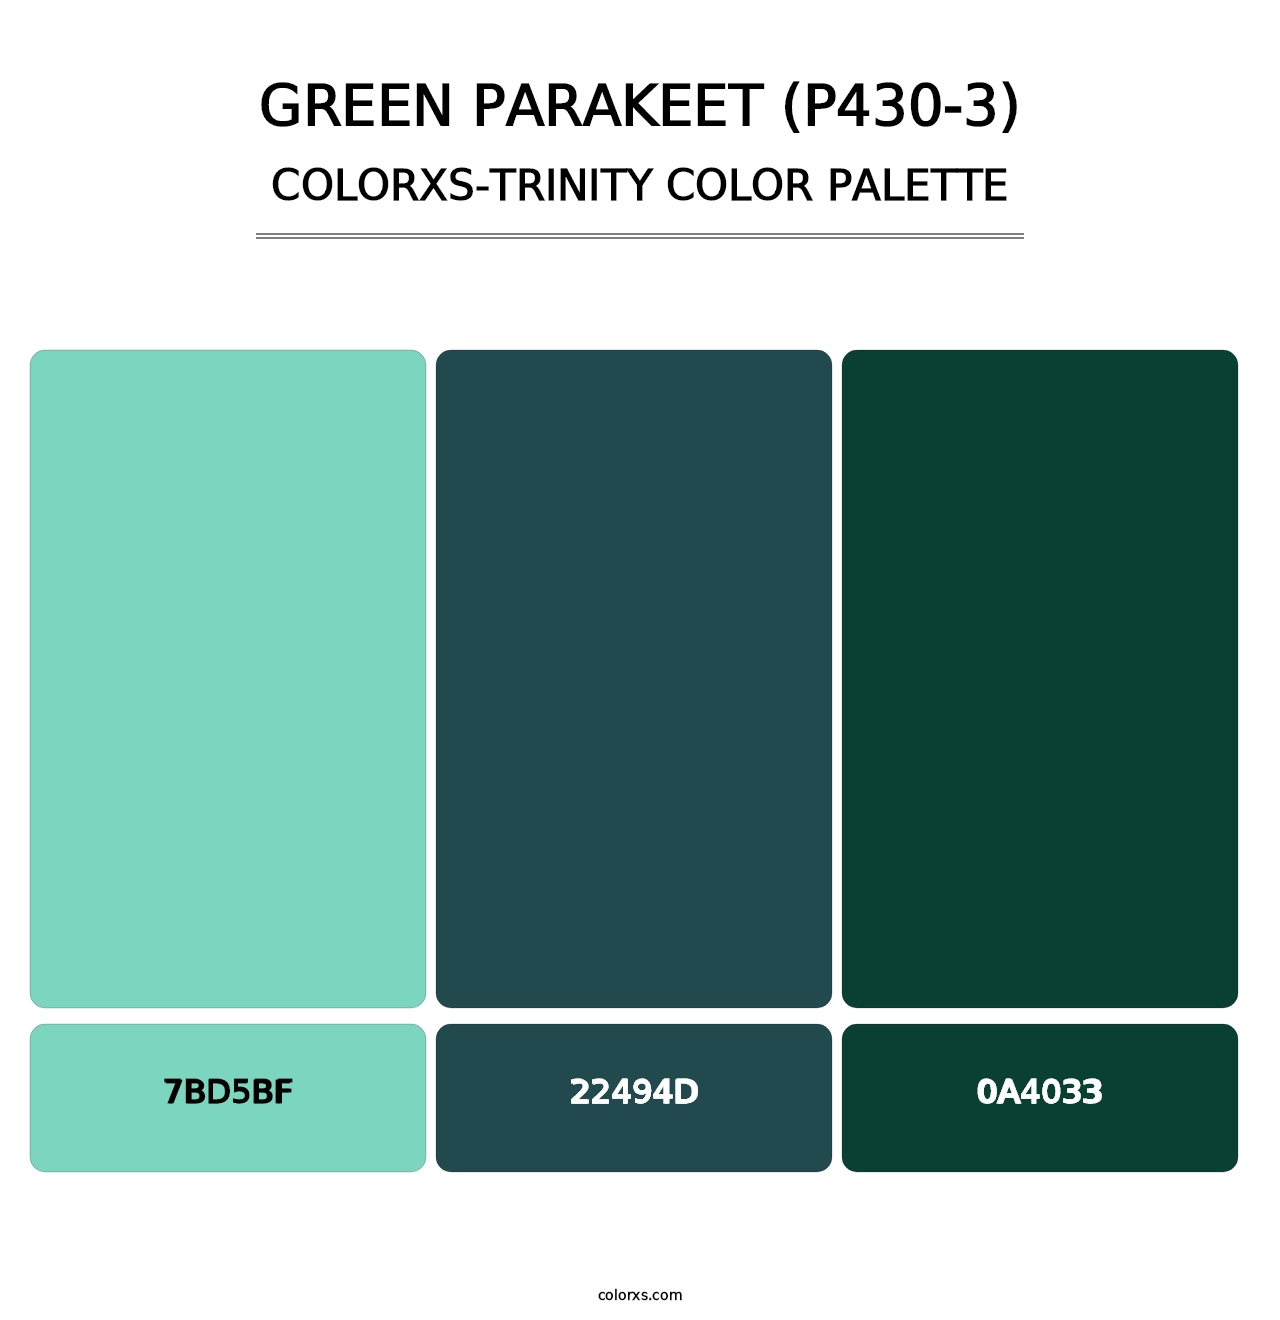 Green Parakeet (P430-3) - Colorxs Trinity Palette